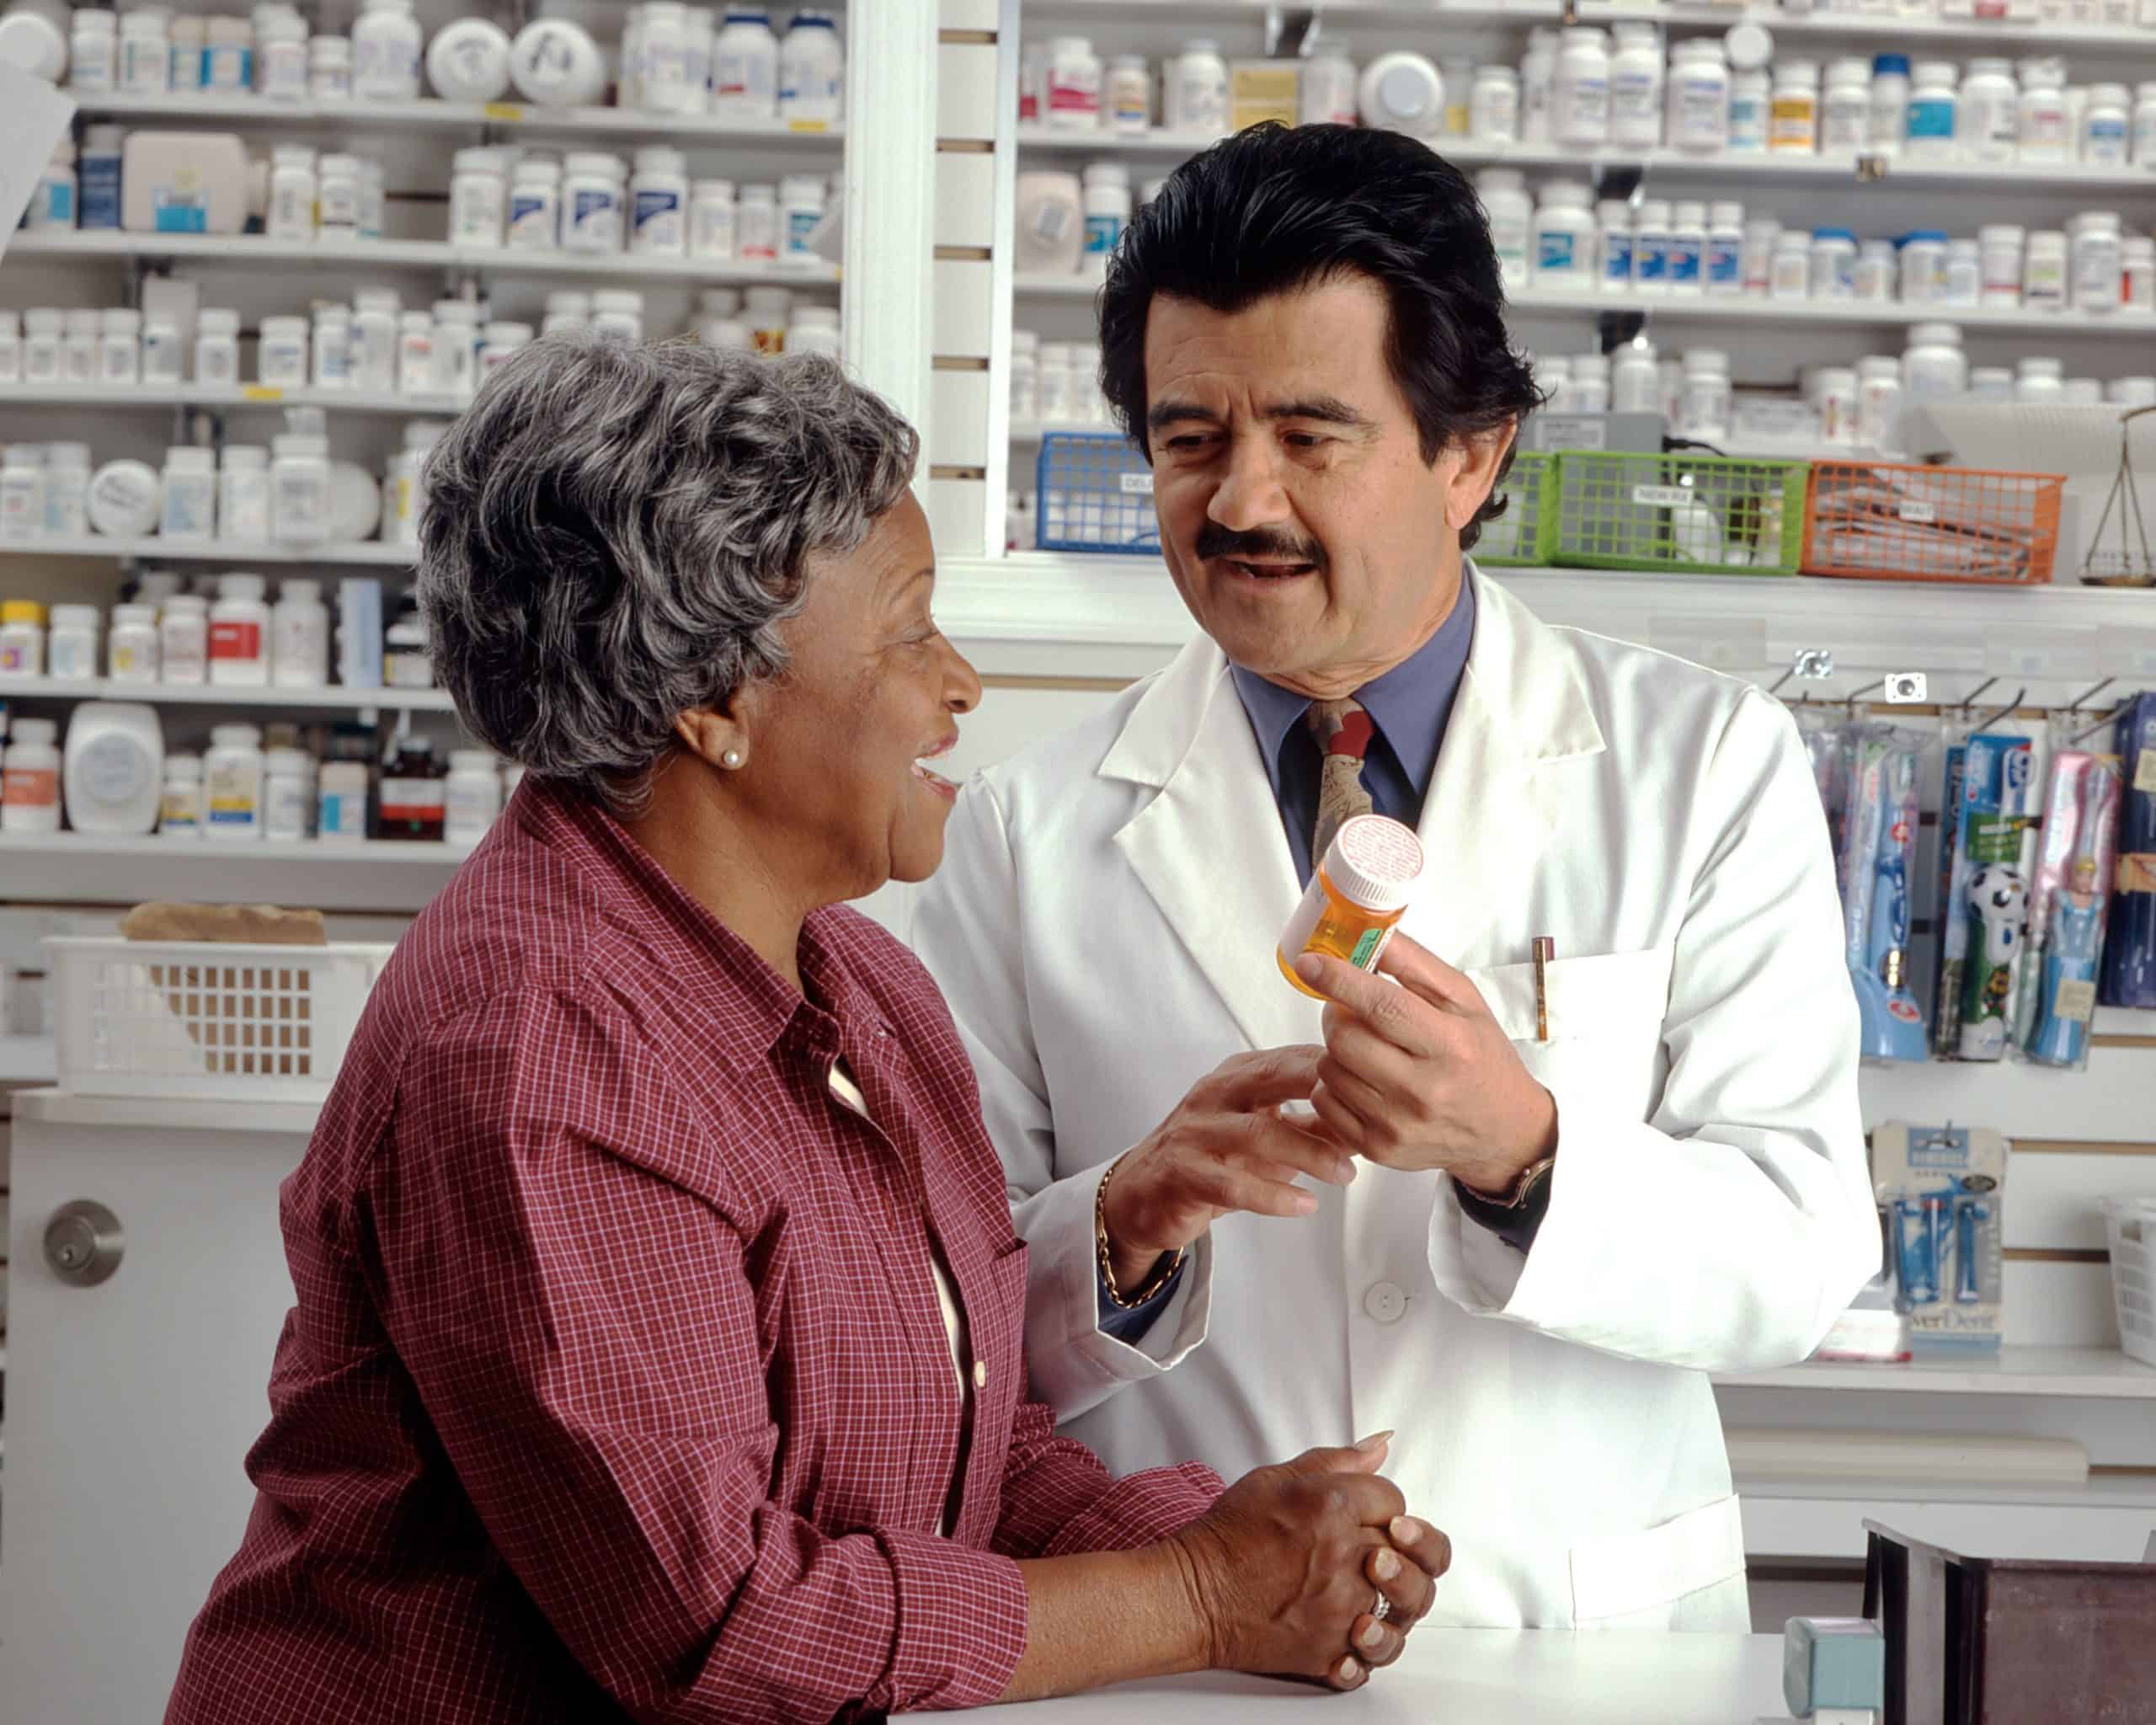 Pharmacy explaining to a customer how to use their prescription